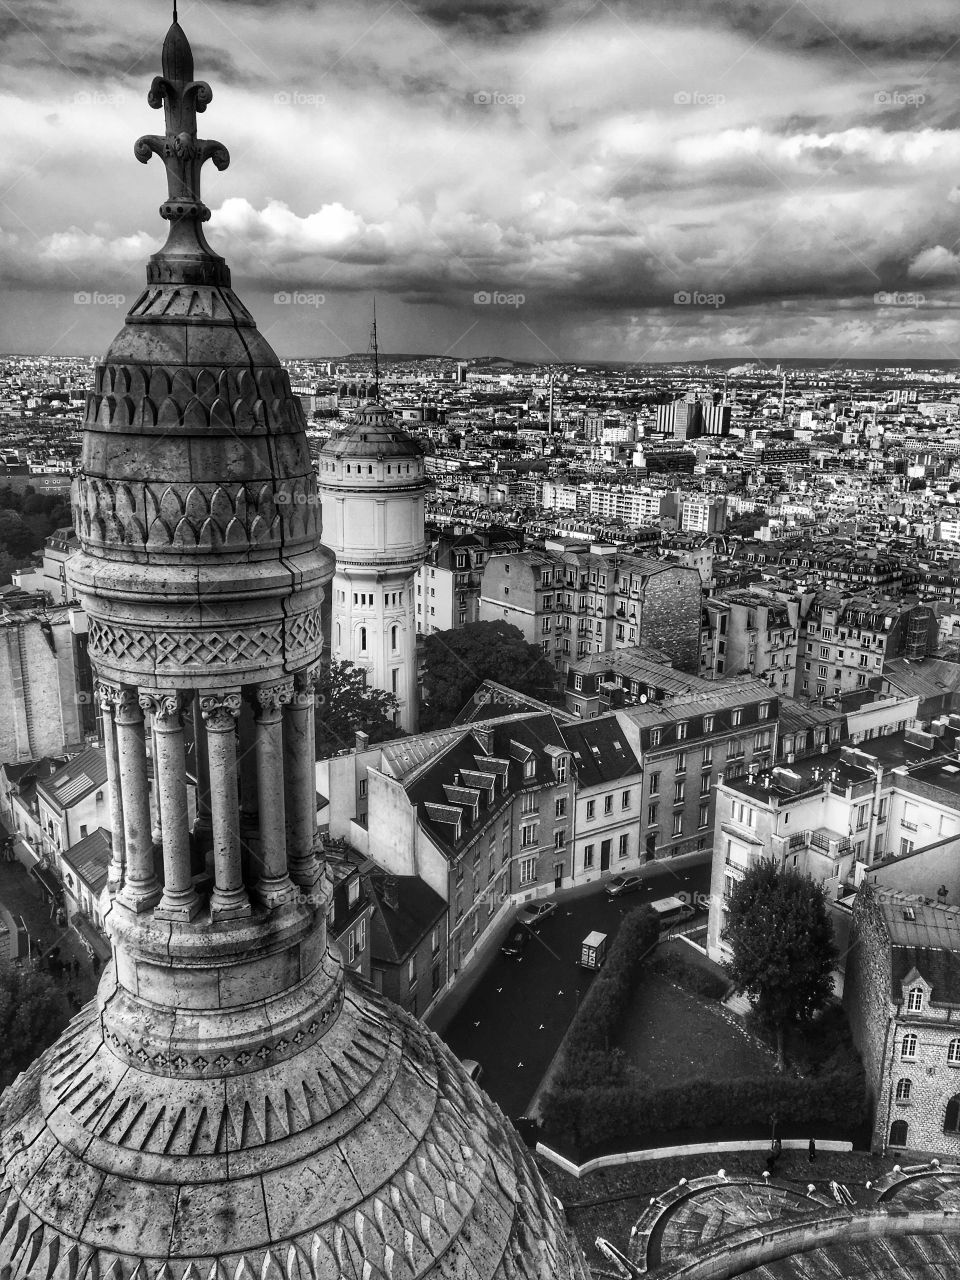 Paris as seen from Sacre Coeur Basilica in Montmartre 